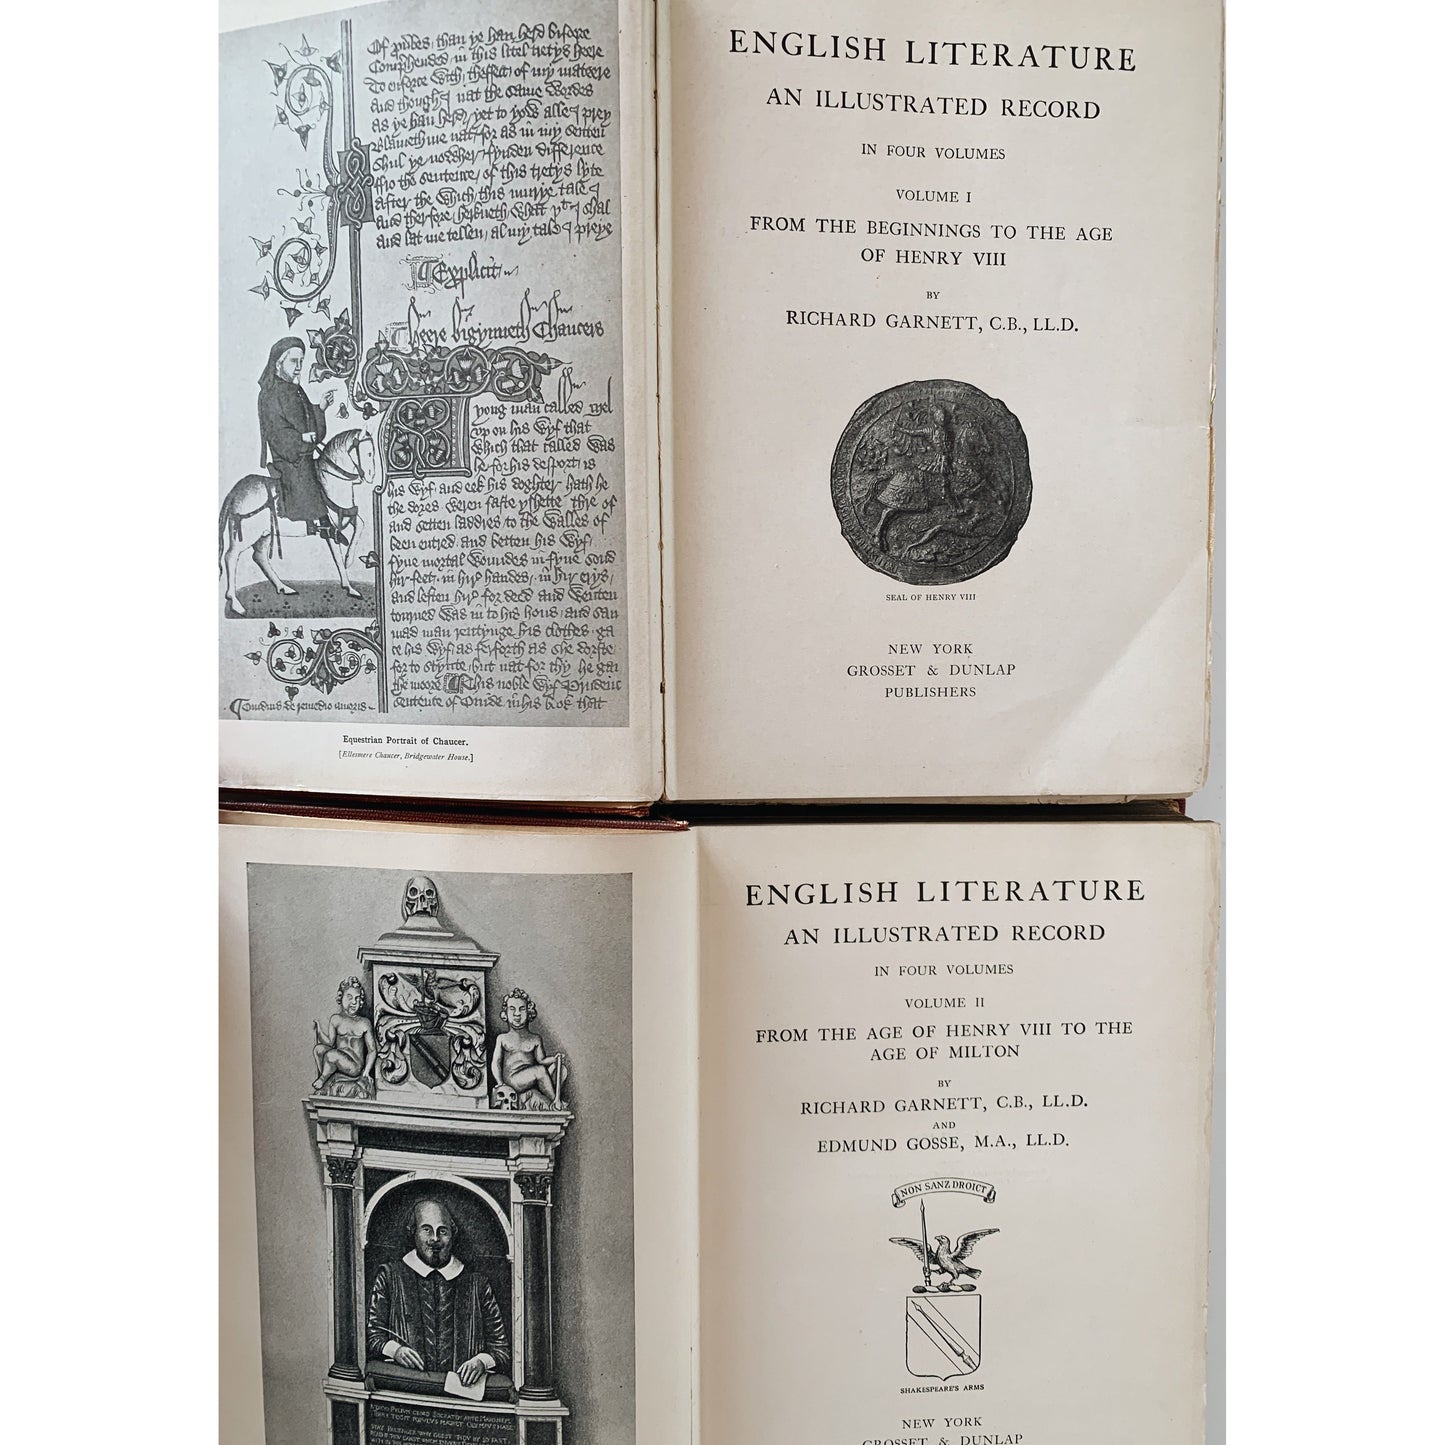 English Literature An Illustrated Record, Richard Garnett, 1904 Hardcover Volumes 1-2